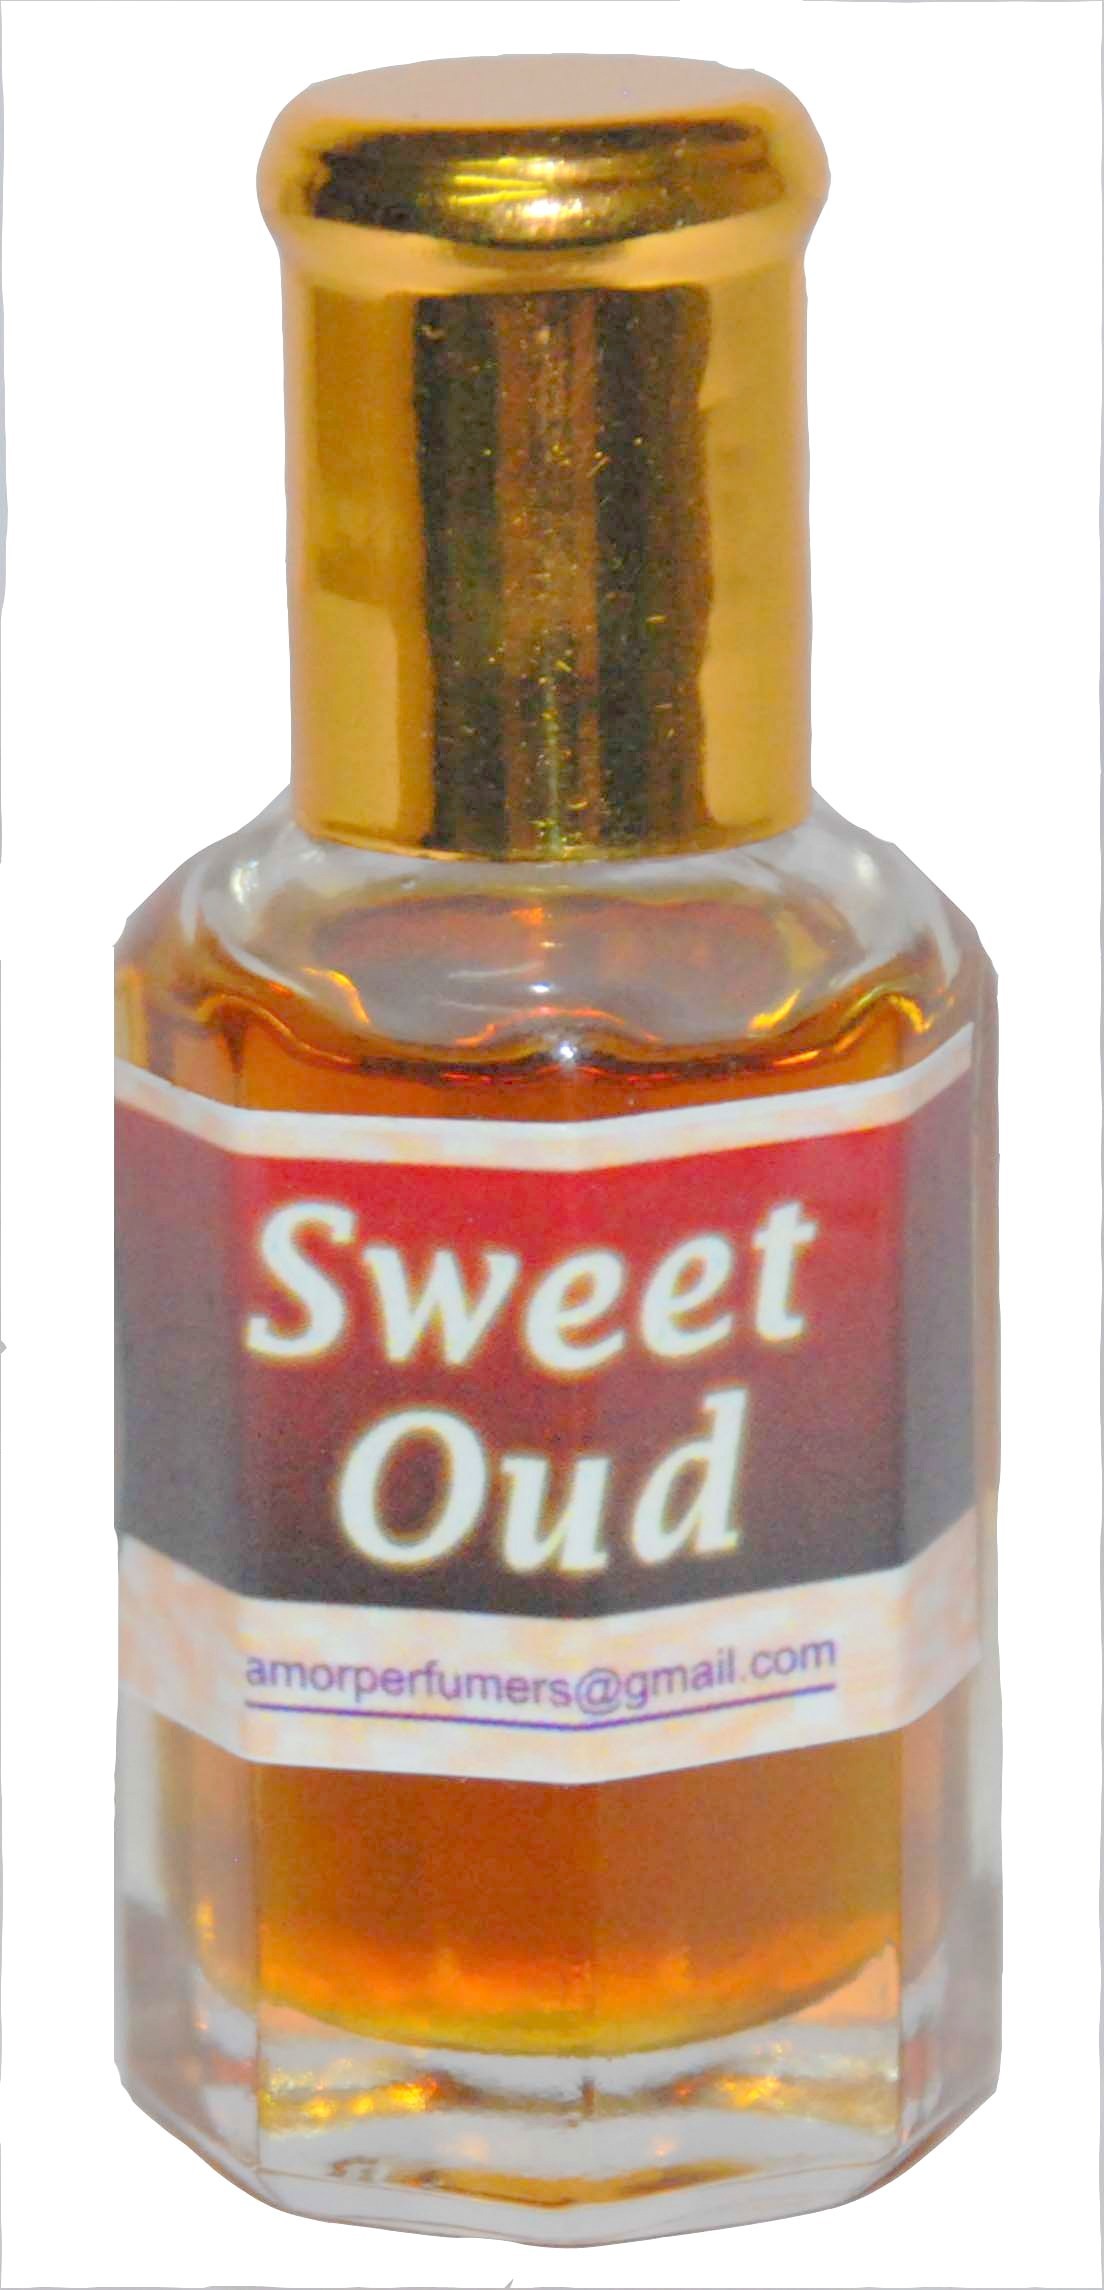 Amor SWEET OUD Herbal Attar(Oud (agarwood))